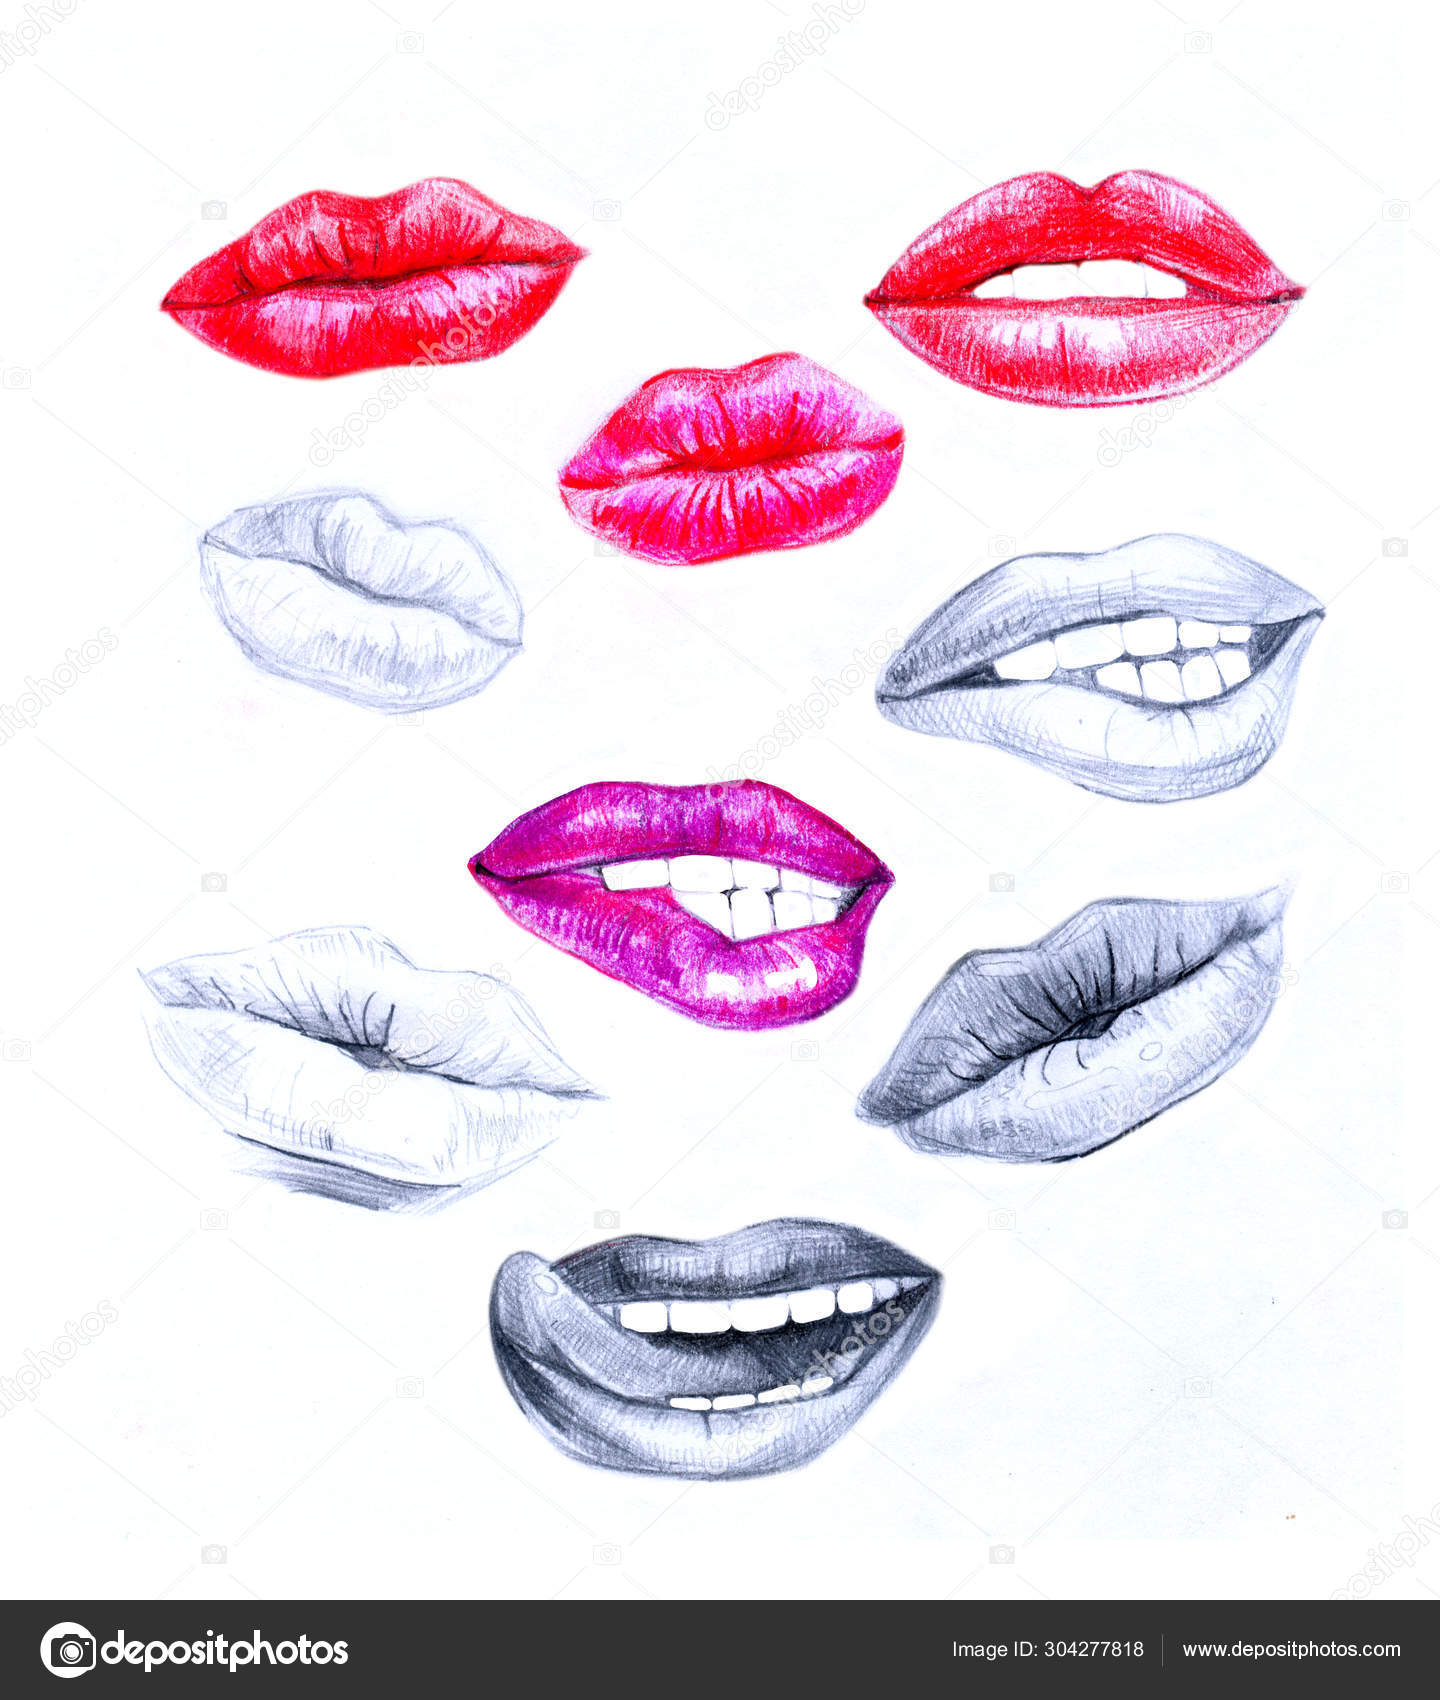 https://st4.depositphotos.com/18881412/30427/i/1600/depositphotos_304277818-stock-illustration-lips-smile-mouth-teeth-part.jpg